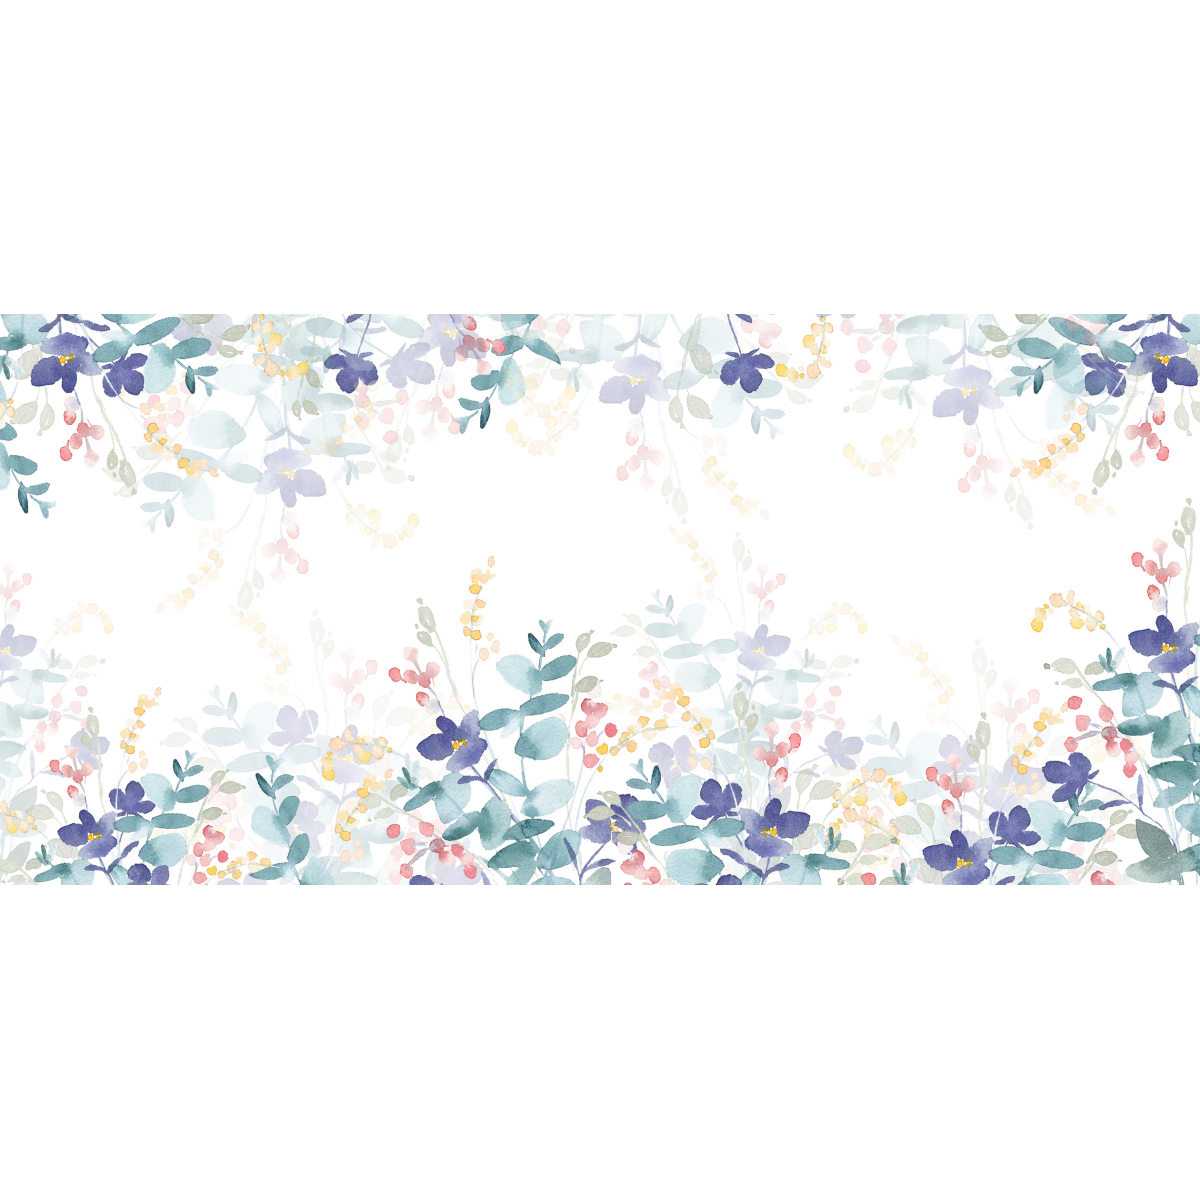 Panoramic wallpaper *Type* - DesignerName* Collection - Acte-Deco